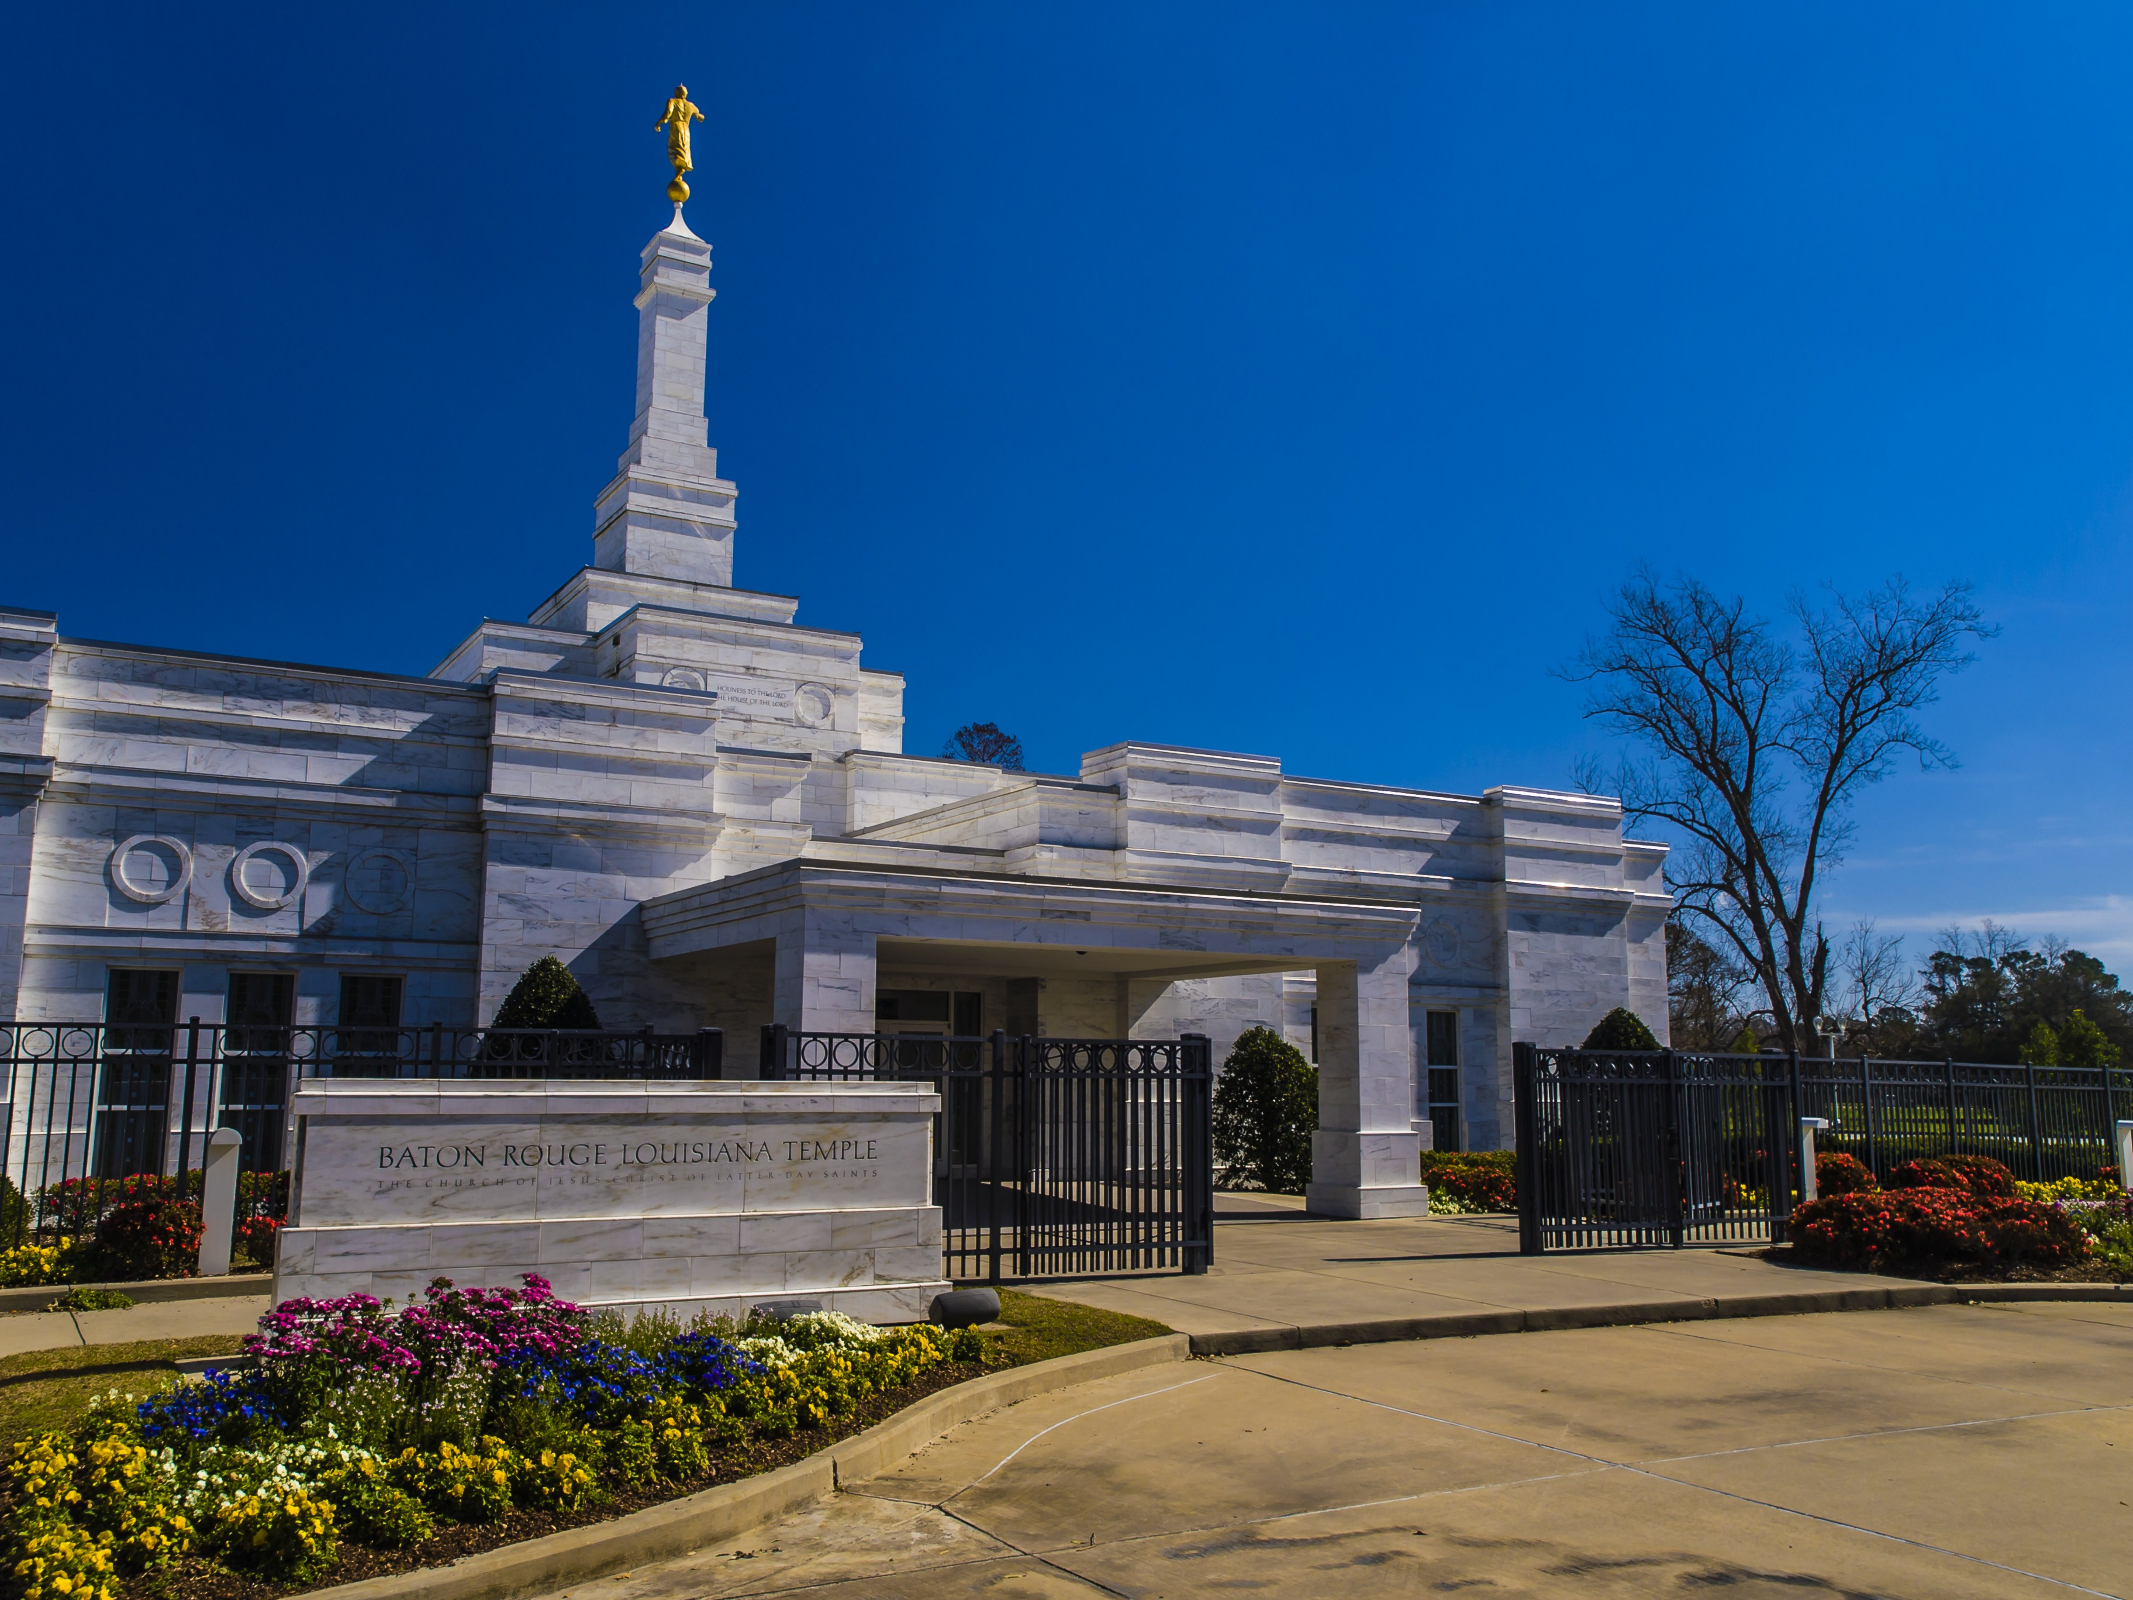 Welcome to the Baton Rouge Louisiana Temple